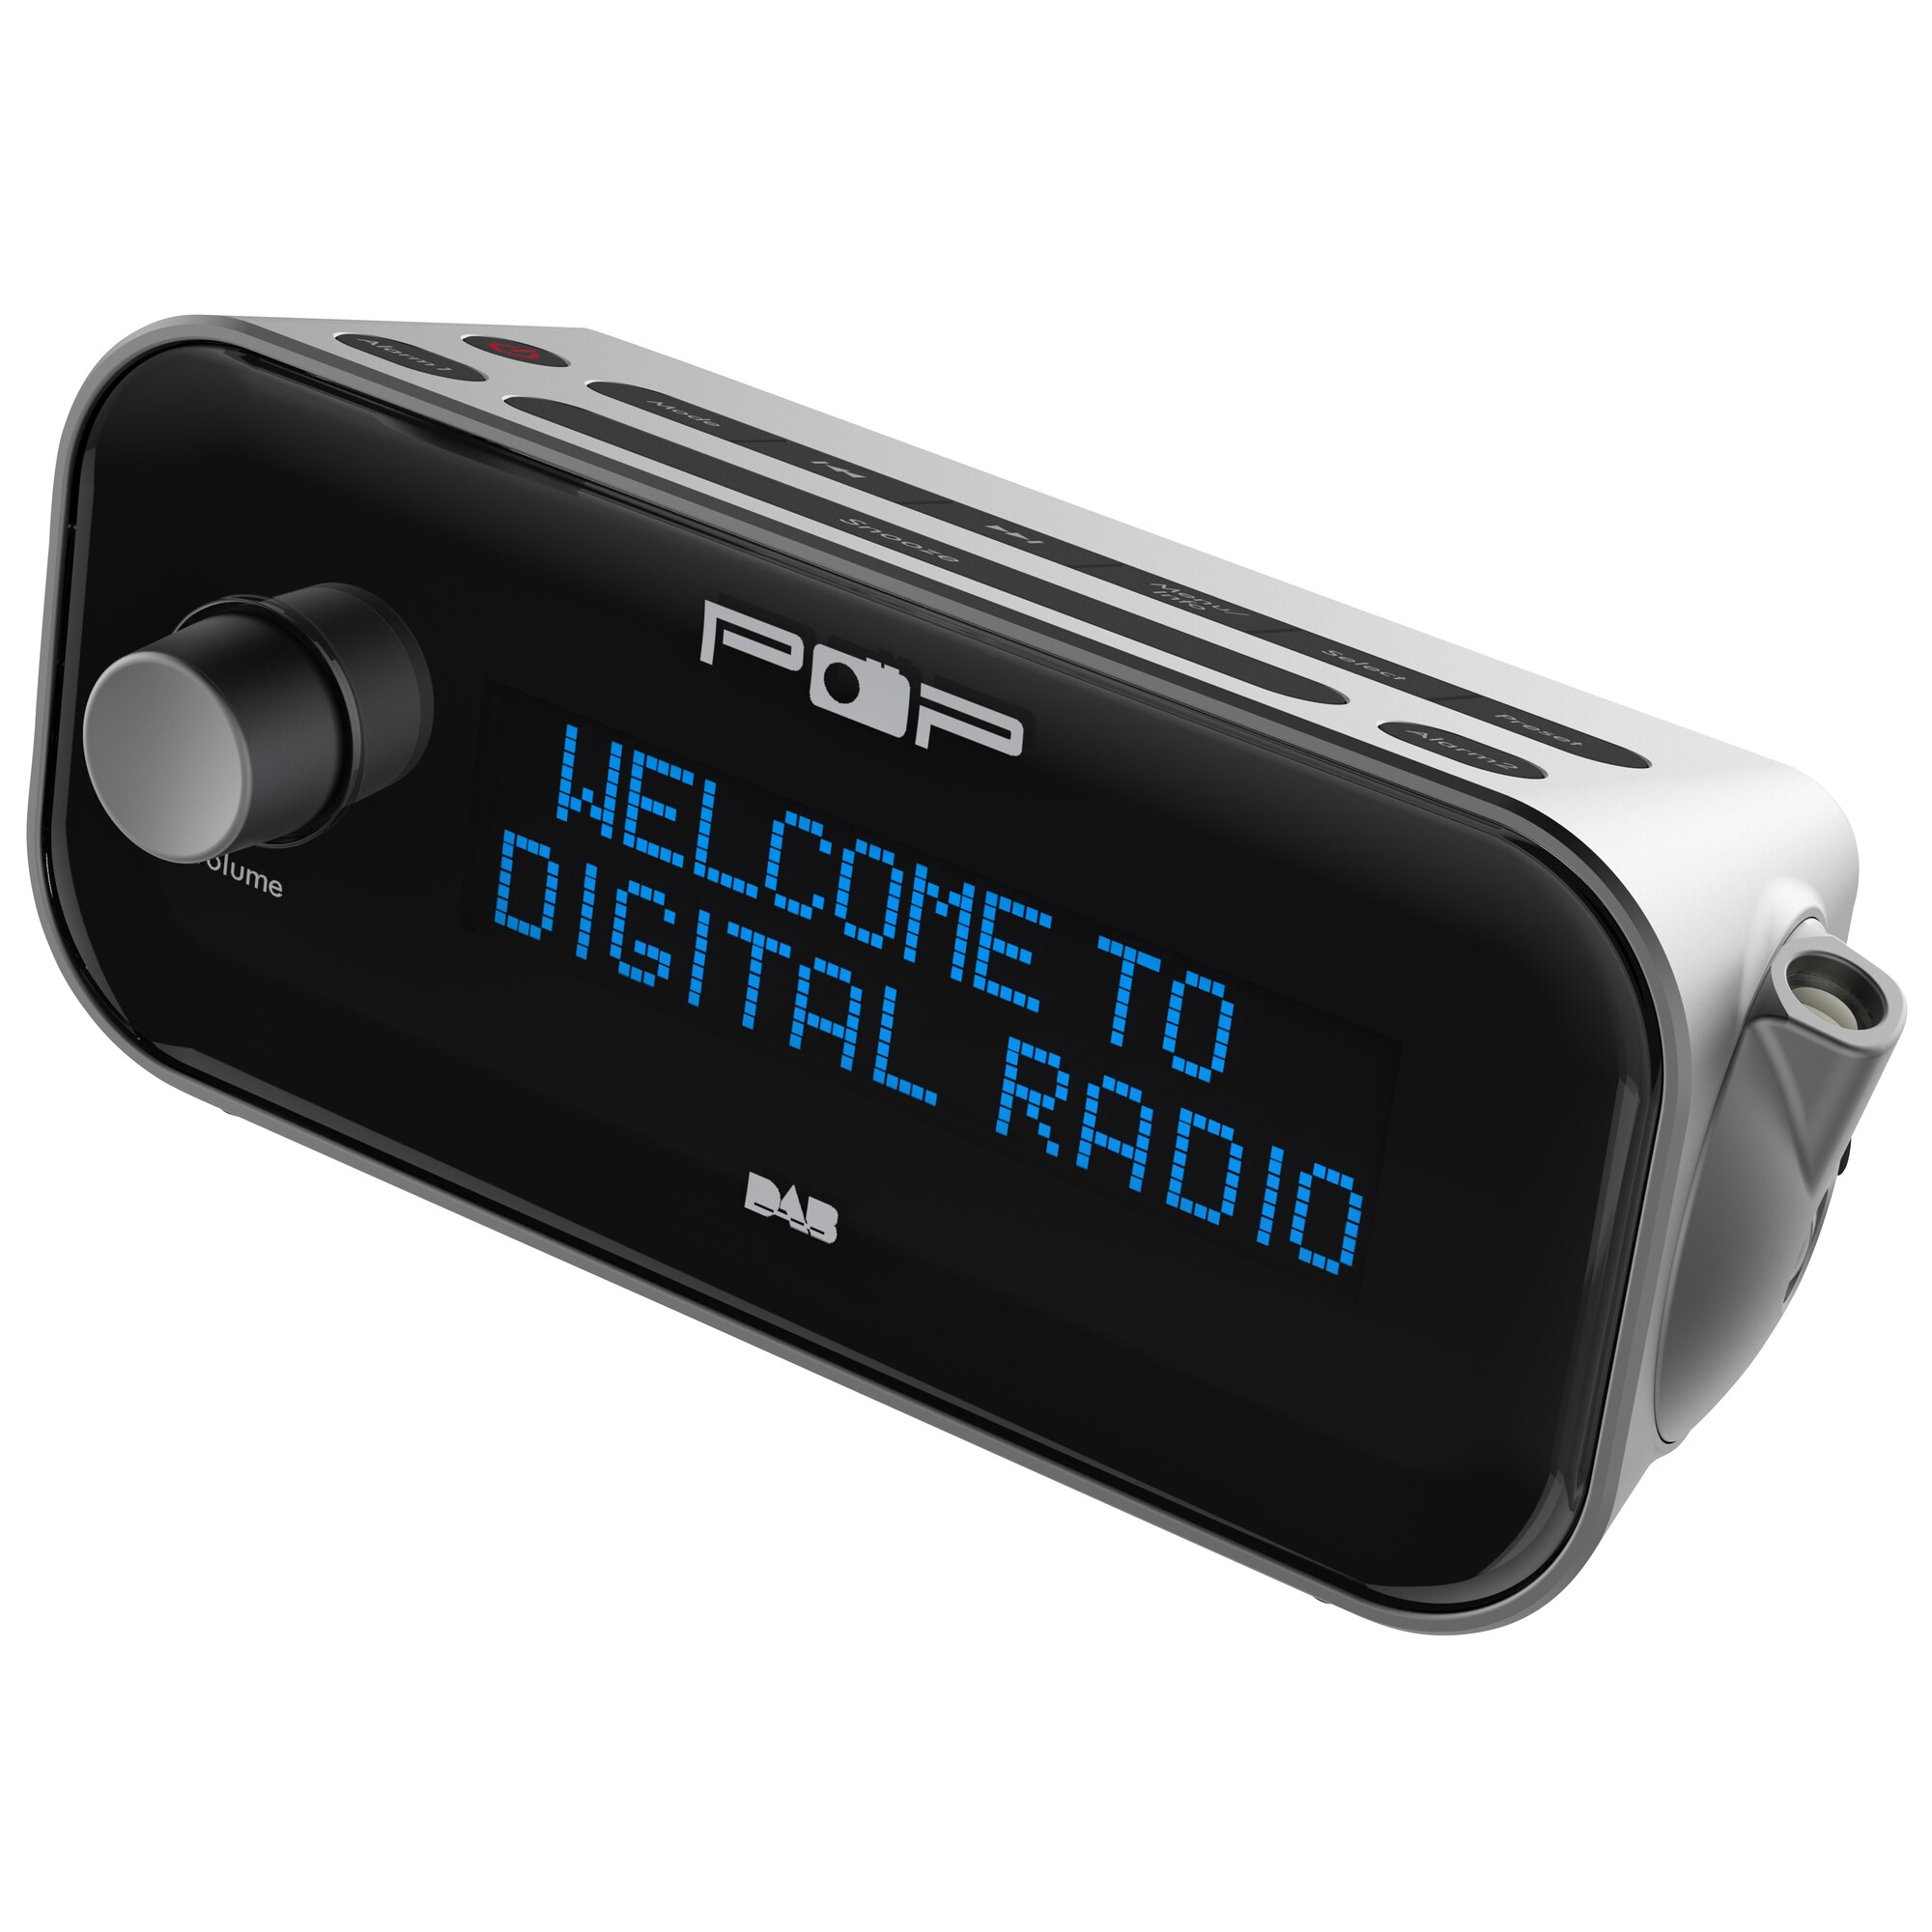 DAB-radio, clockradio, boombox og stereoanlæg - Elgiganten